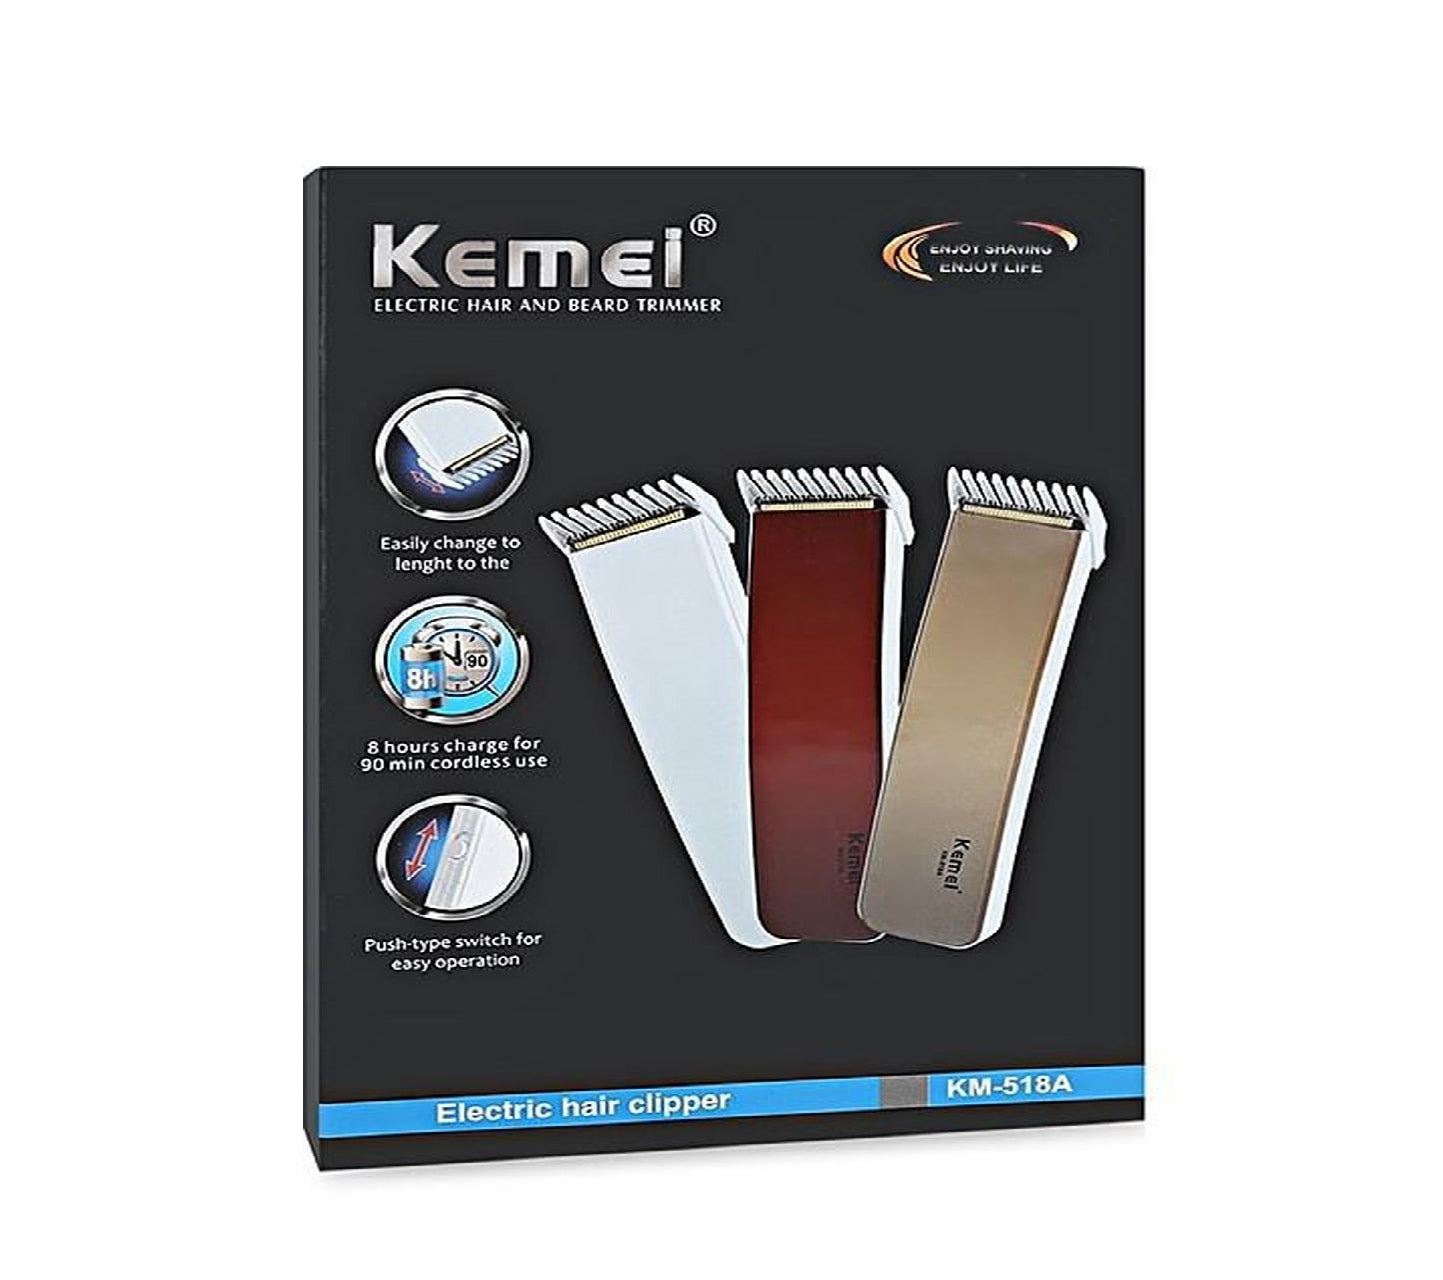 KEMEI Electric Hair & Beard Trimmer